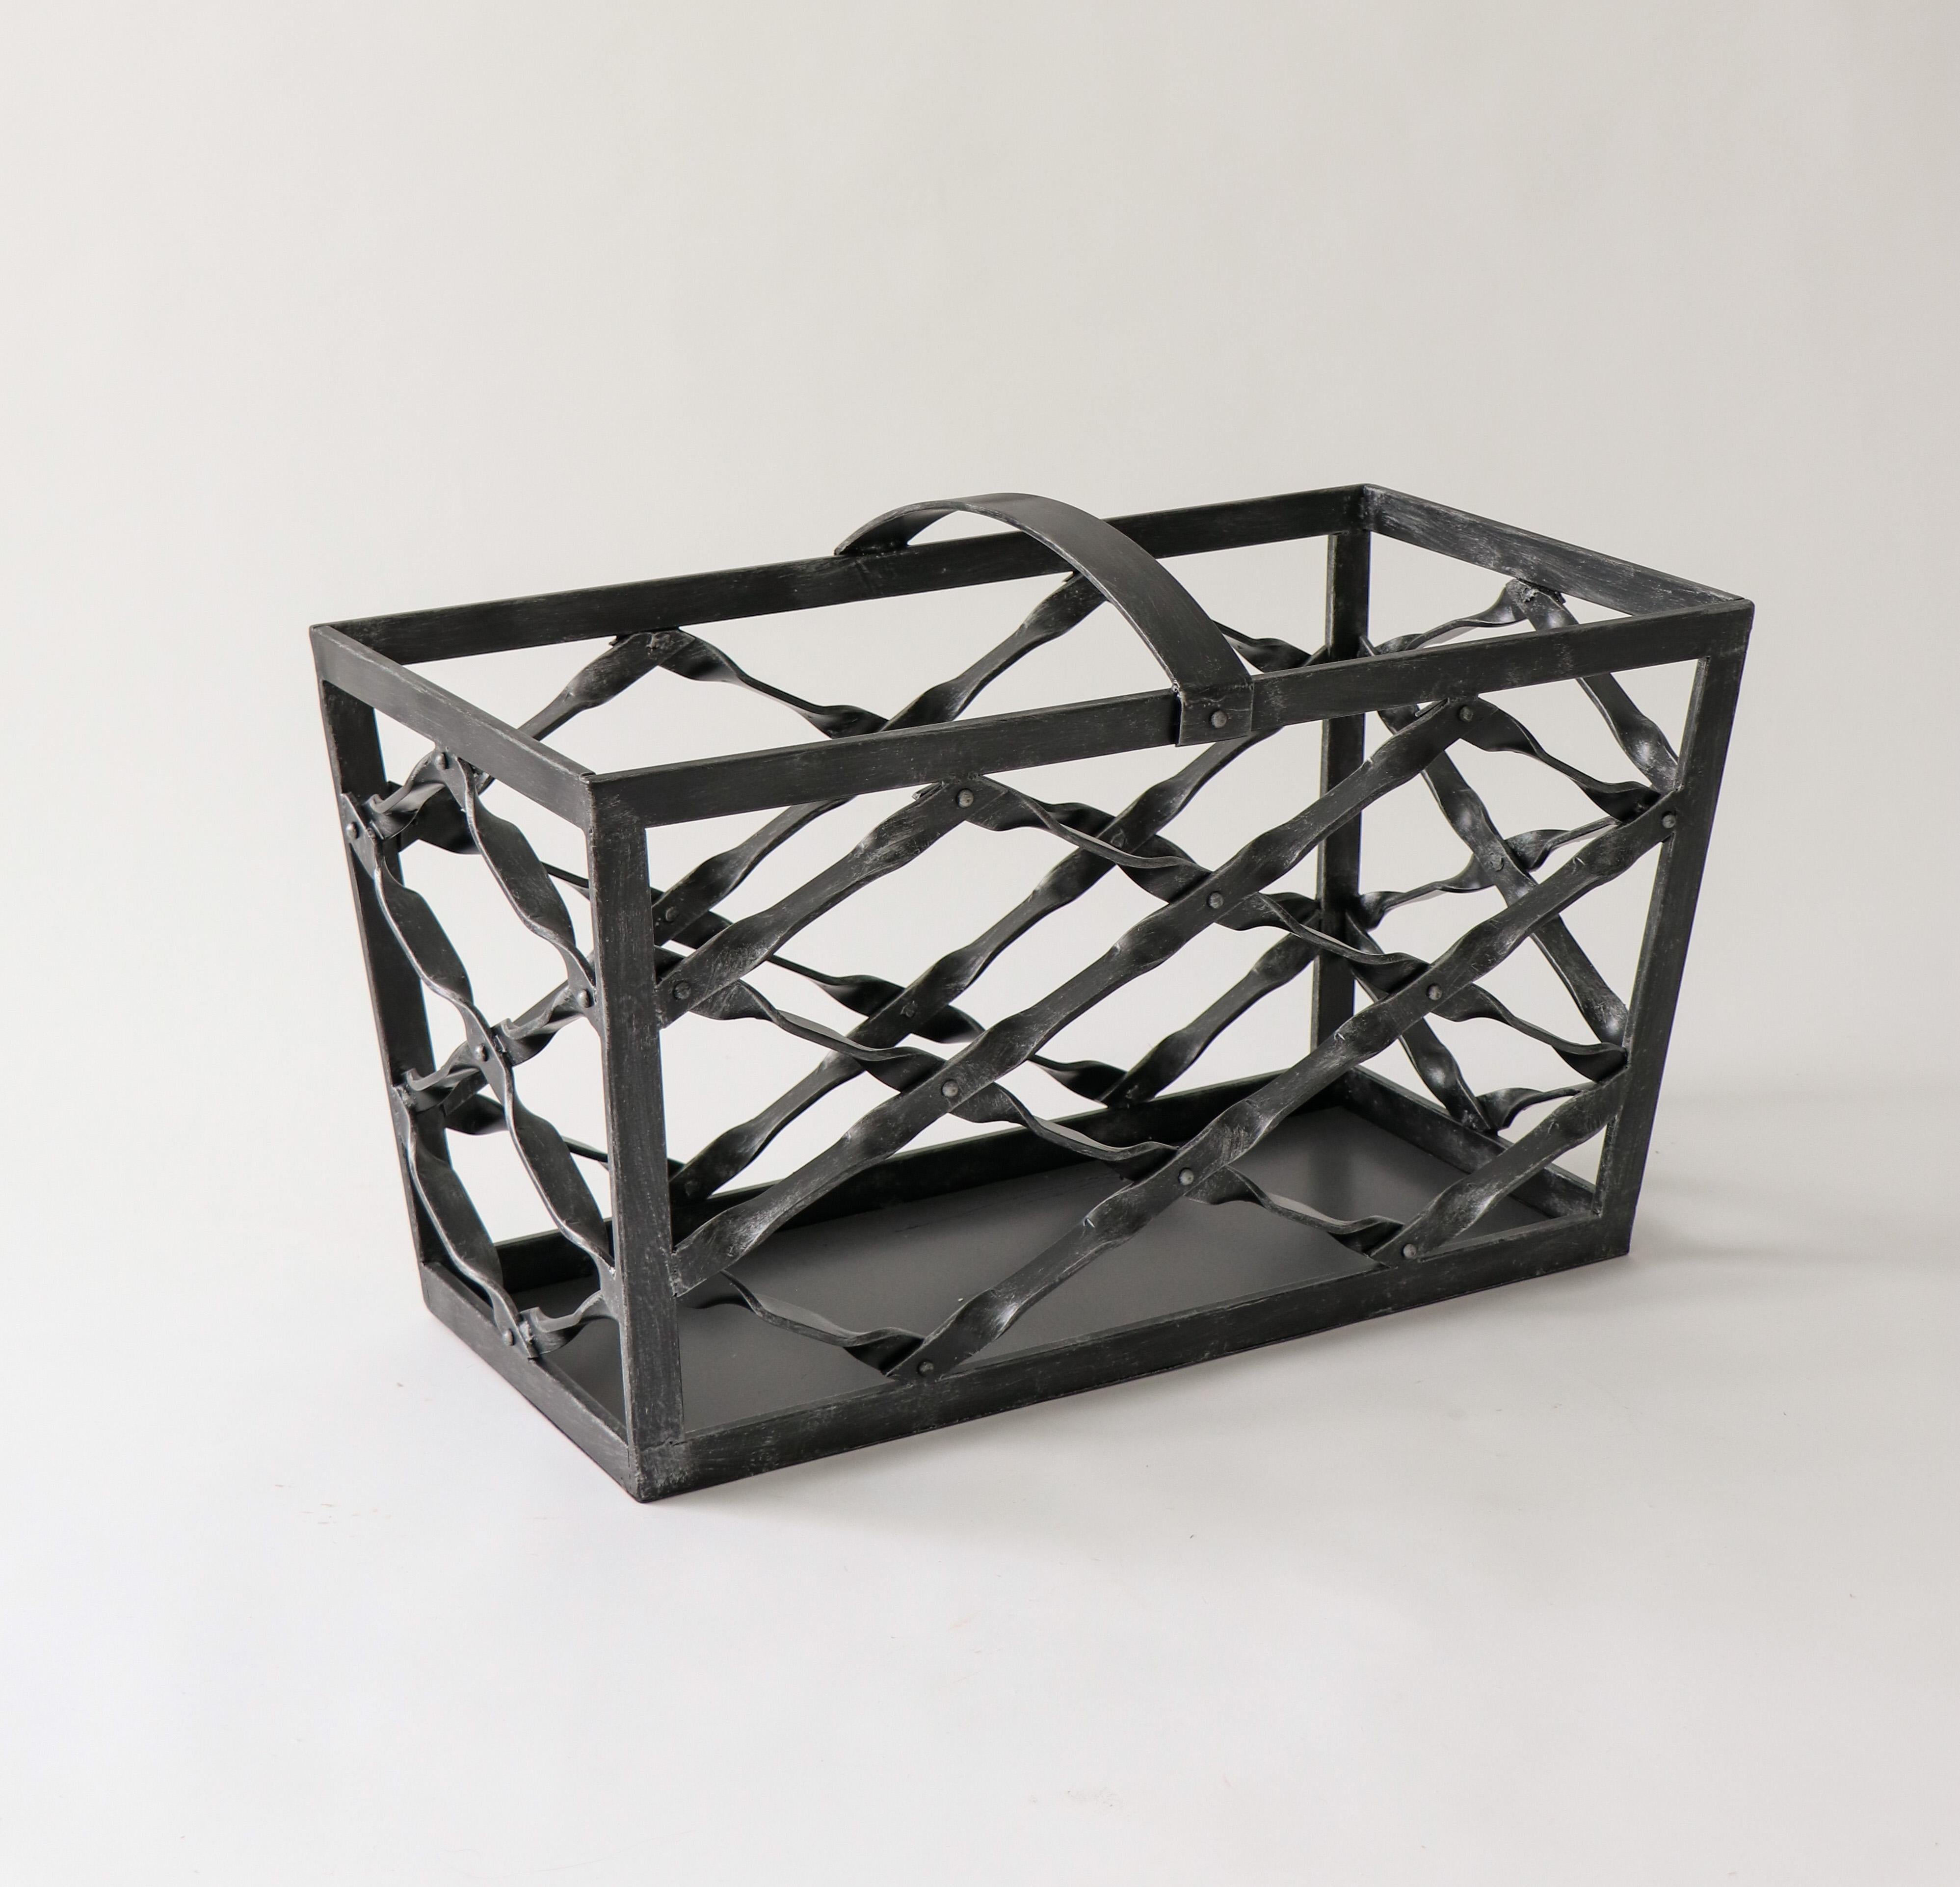 Forged Sculptural Big Black Iron Basket Storage Contemporary Design Wrought Iron